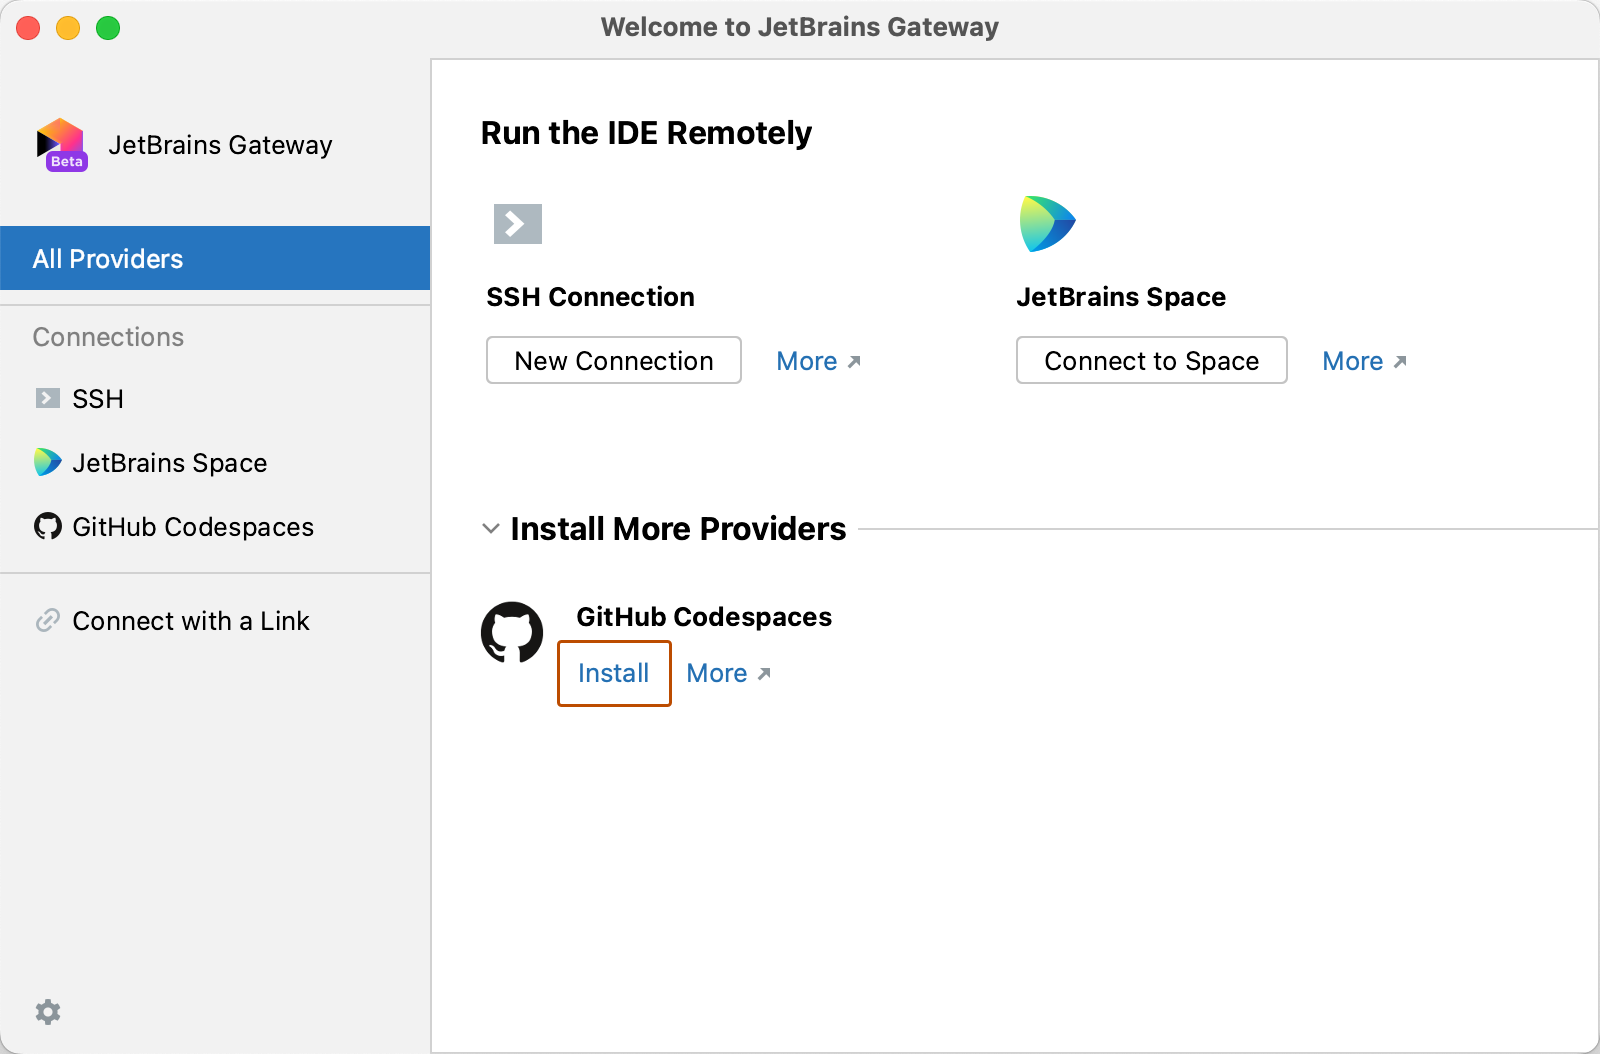 Screenshot of the JetBrains Gateway initial view